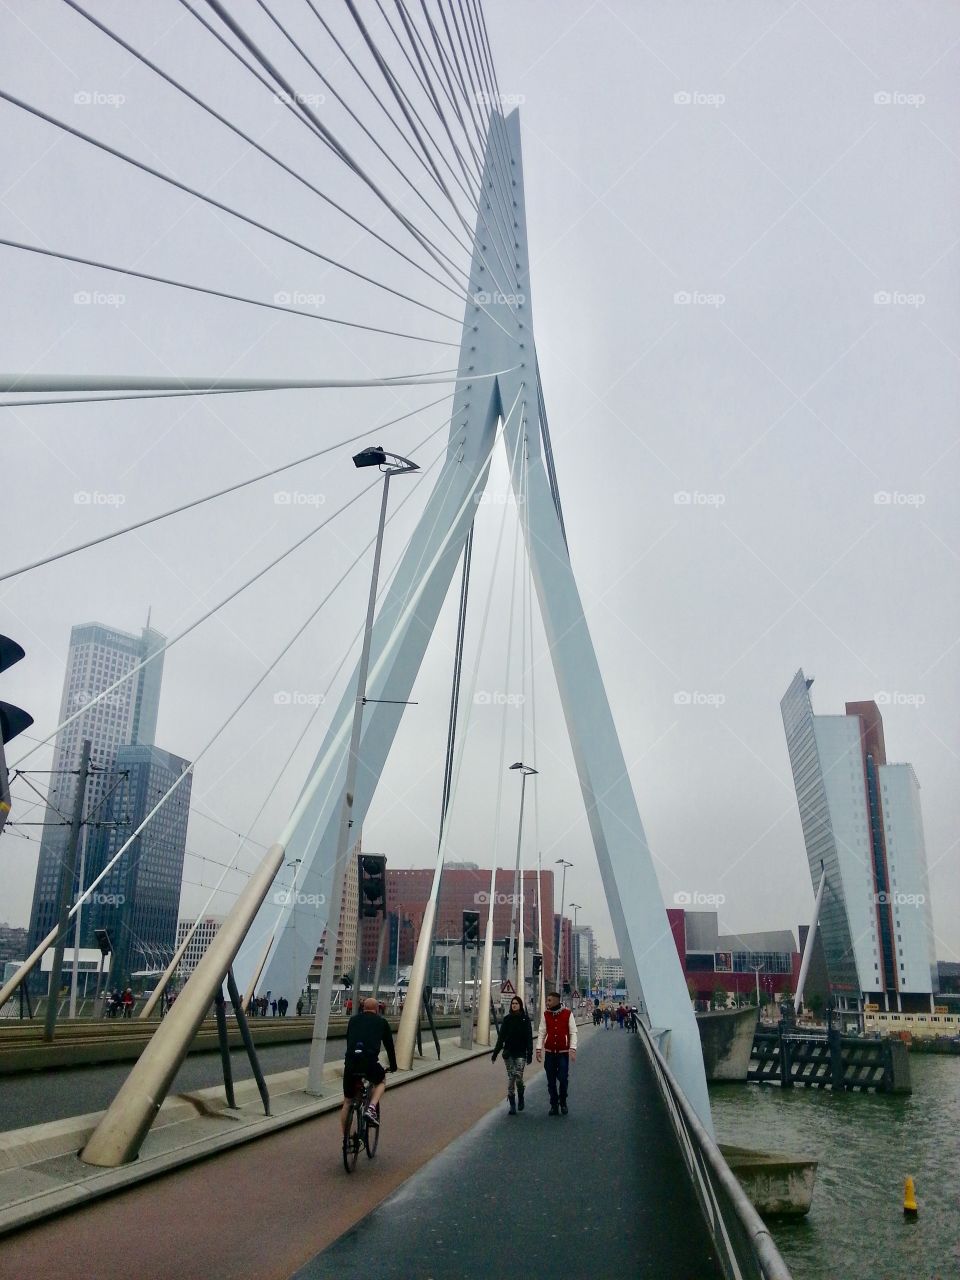 Erasmus bridge: Visit beautiful and modern Rotterdam